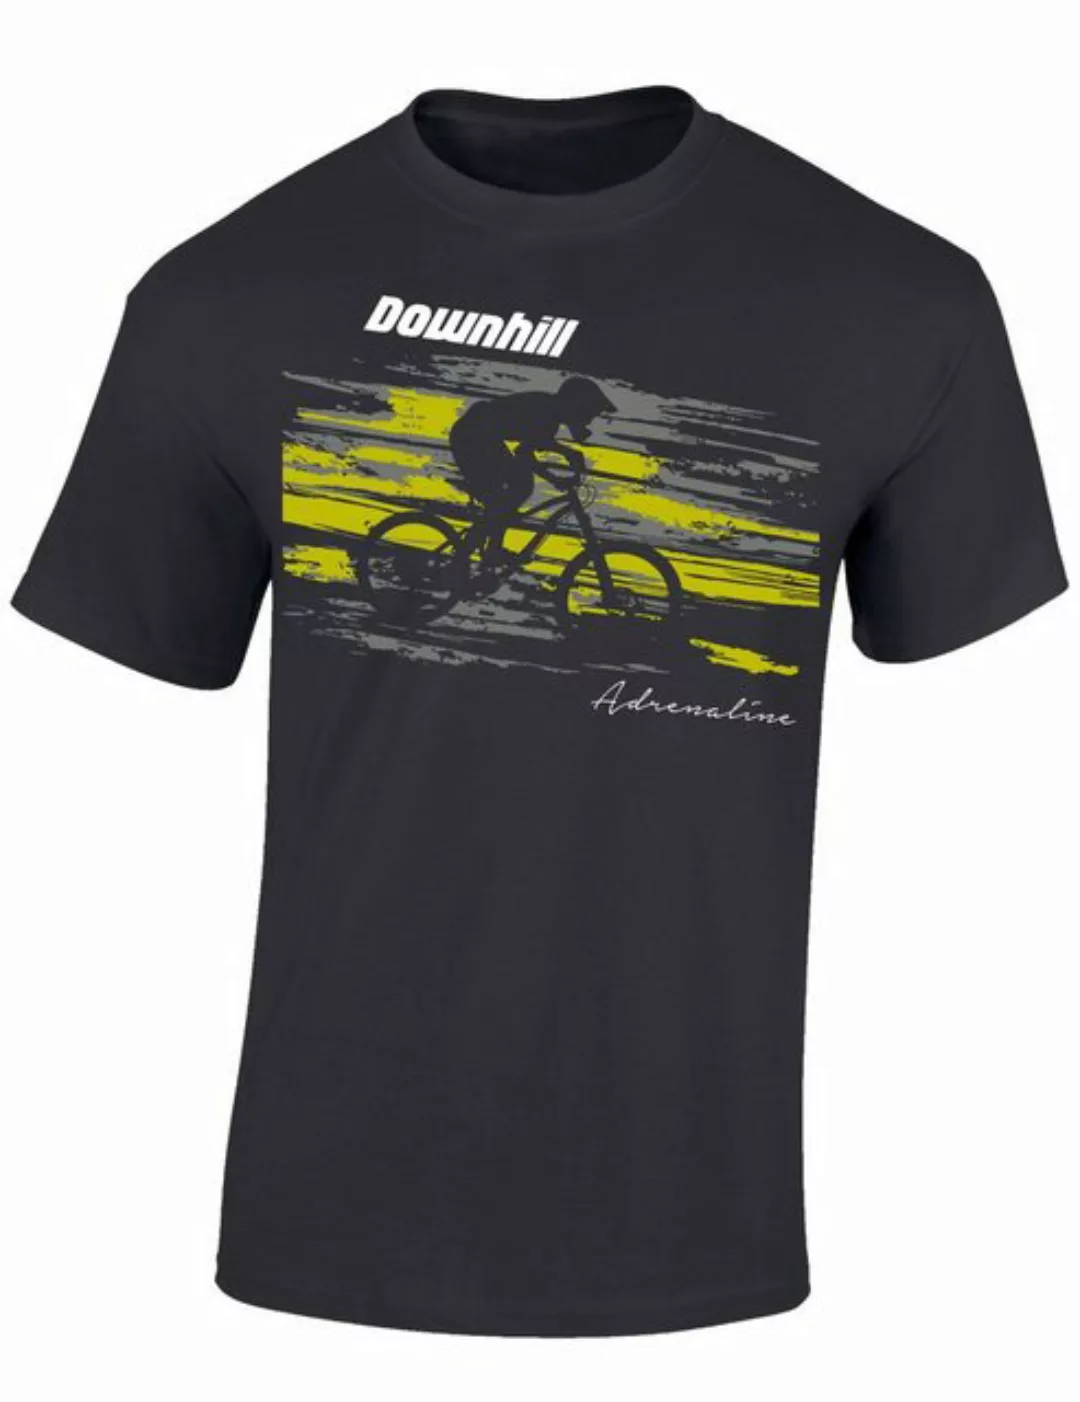 Baddery Print-Shirt Fahrrad T-Shirt: "Downhill Adrenaline", hochwertiger Si günstig online kaufen